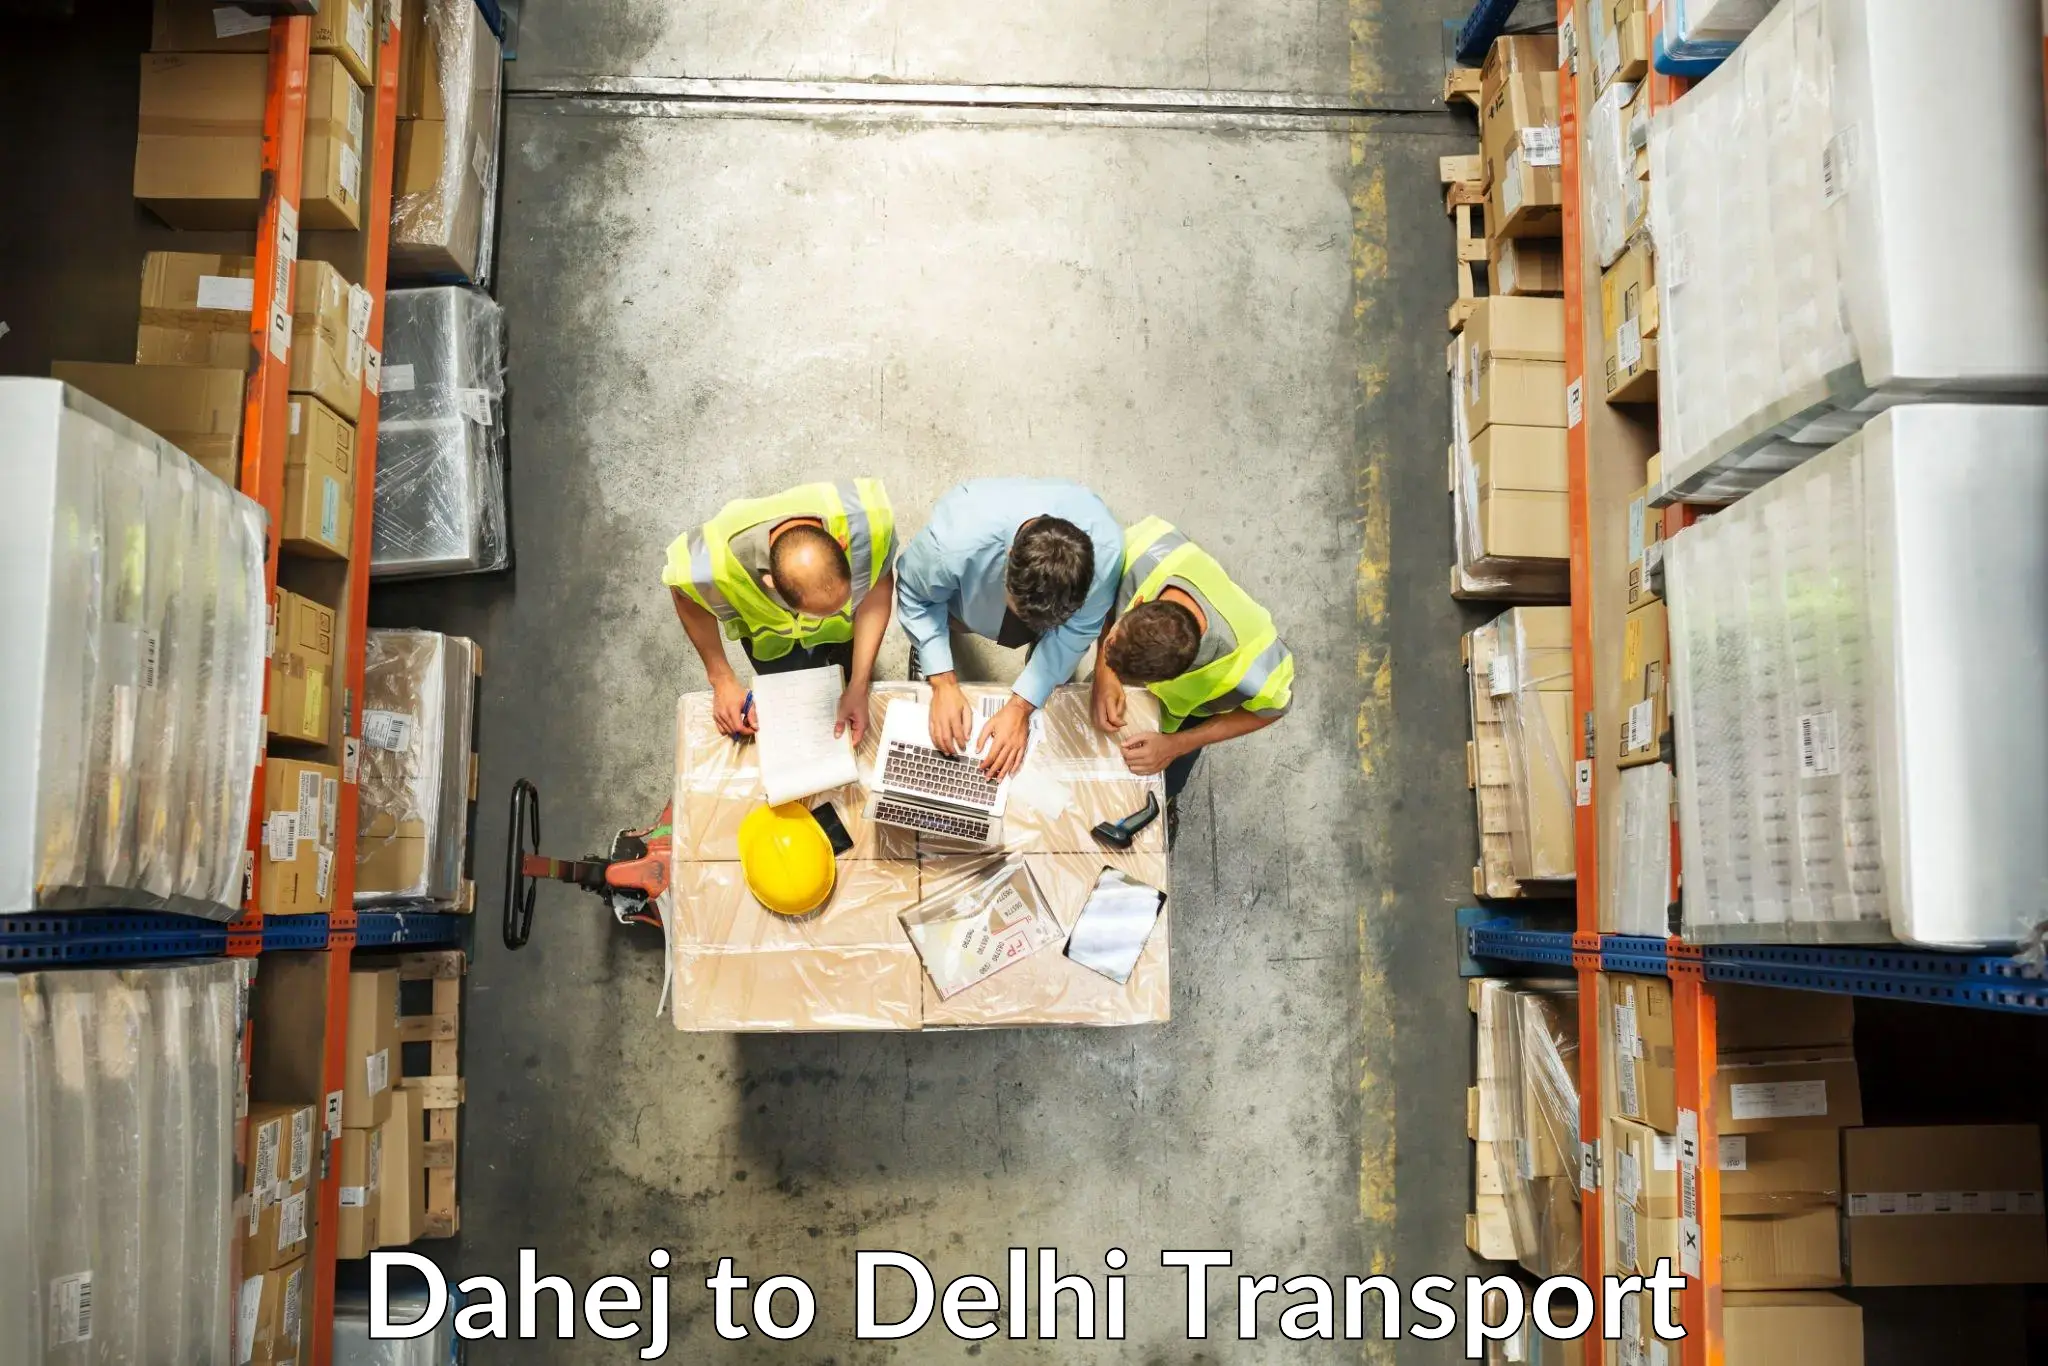 Bike transport service Dahej to Delhi